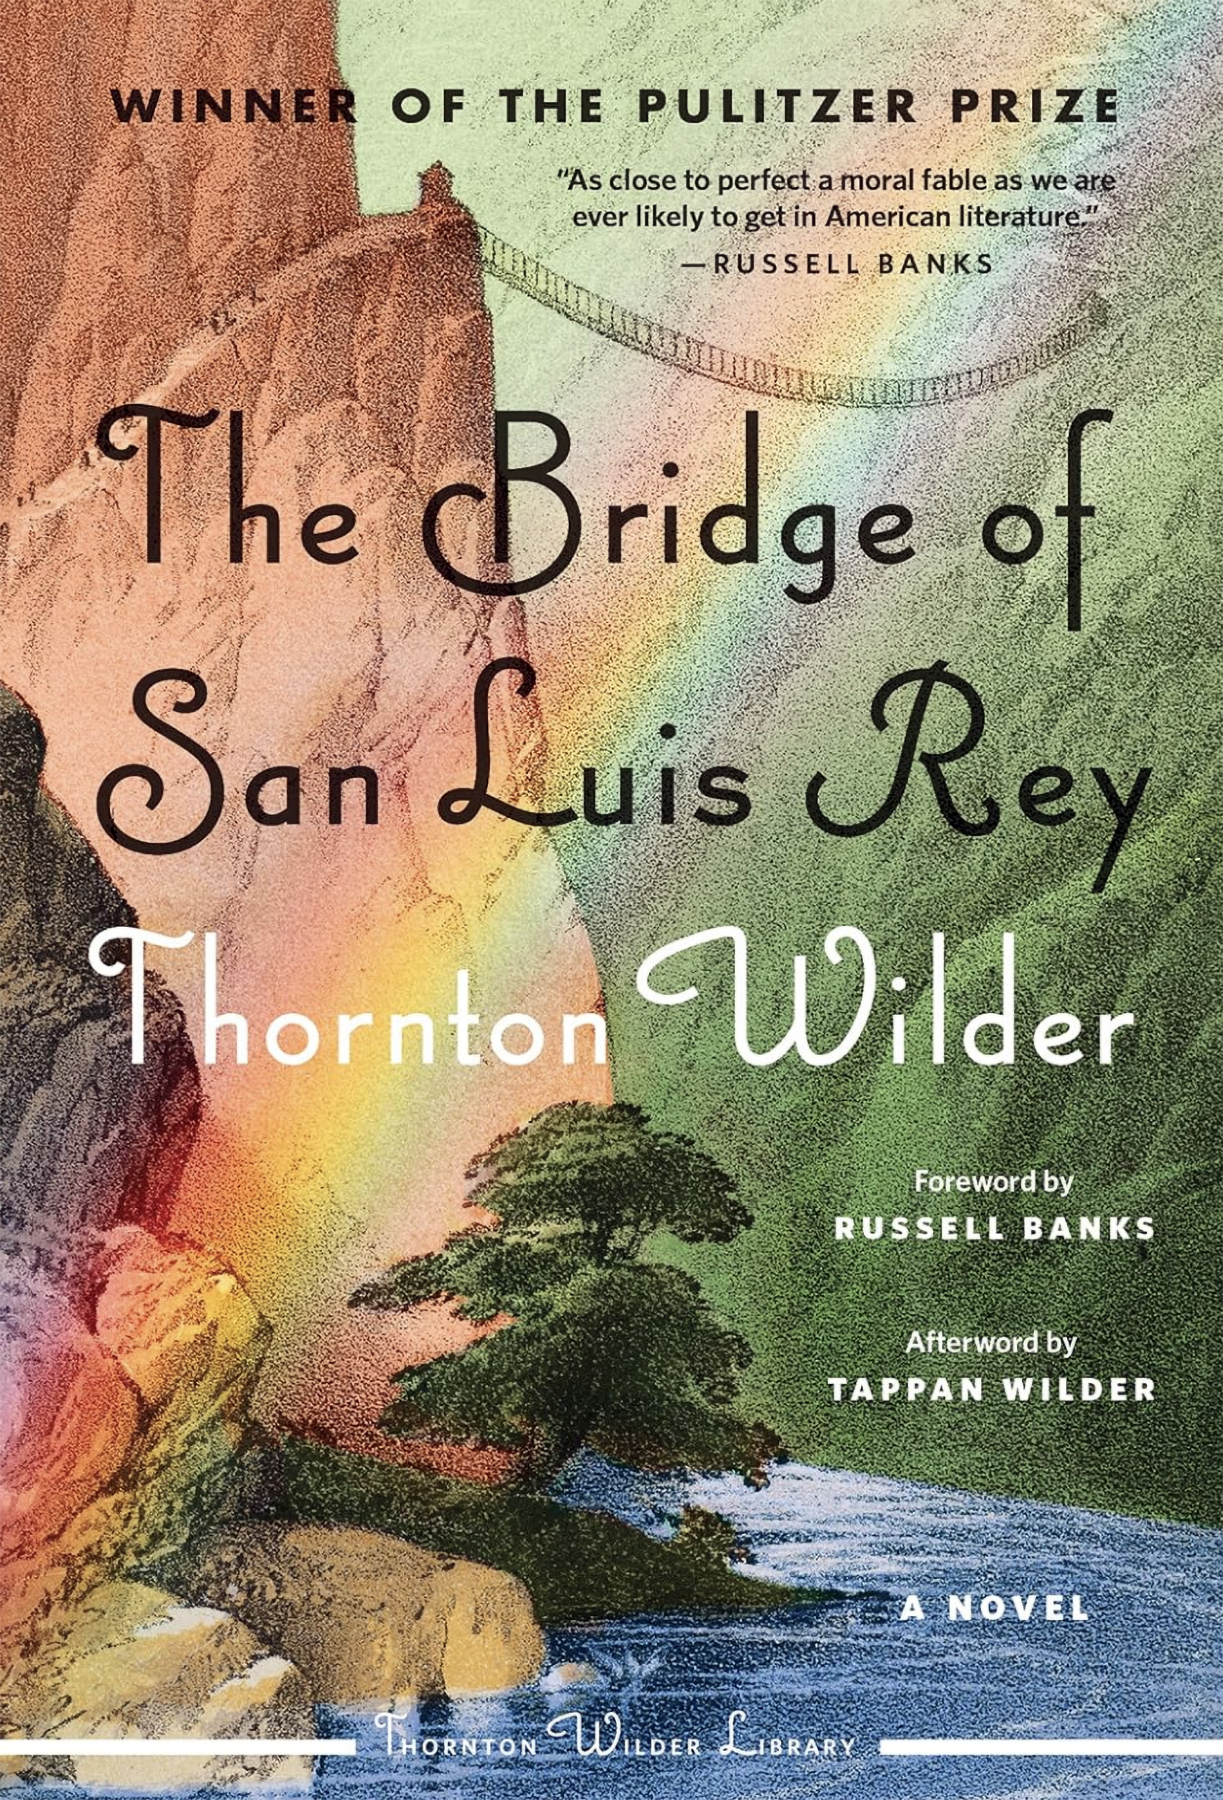 Book cover: "The Bridge of San Luis Rey."